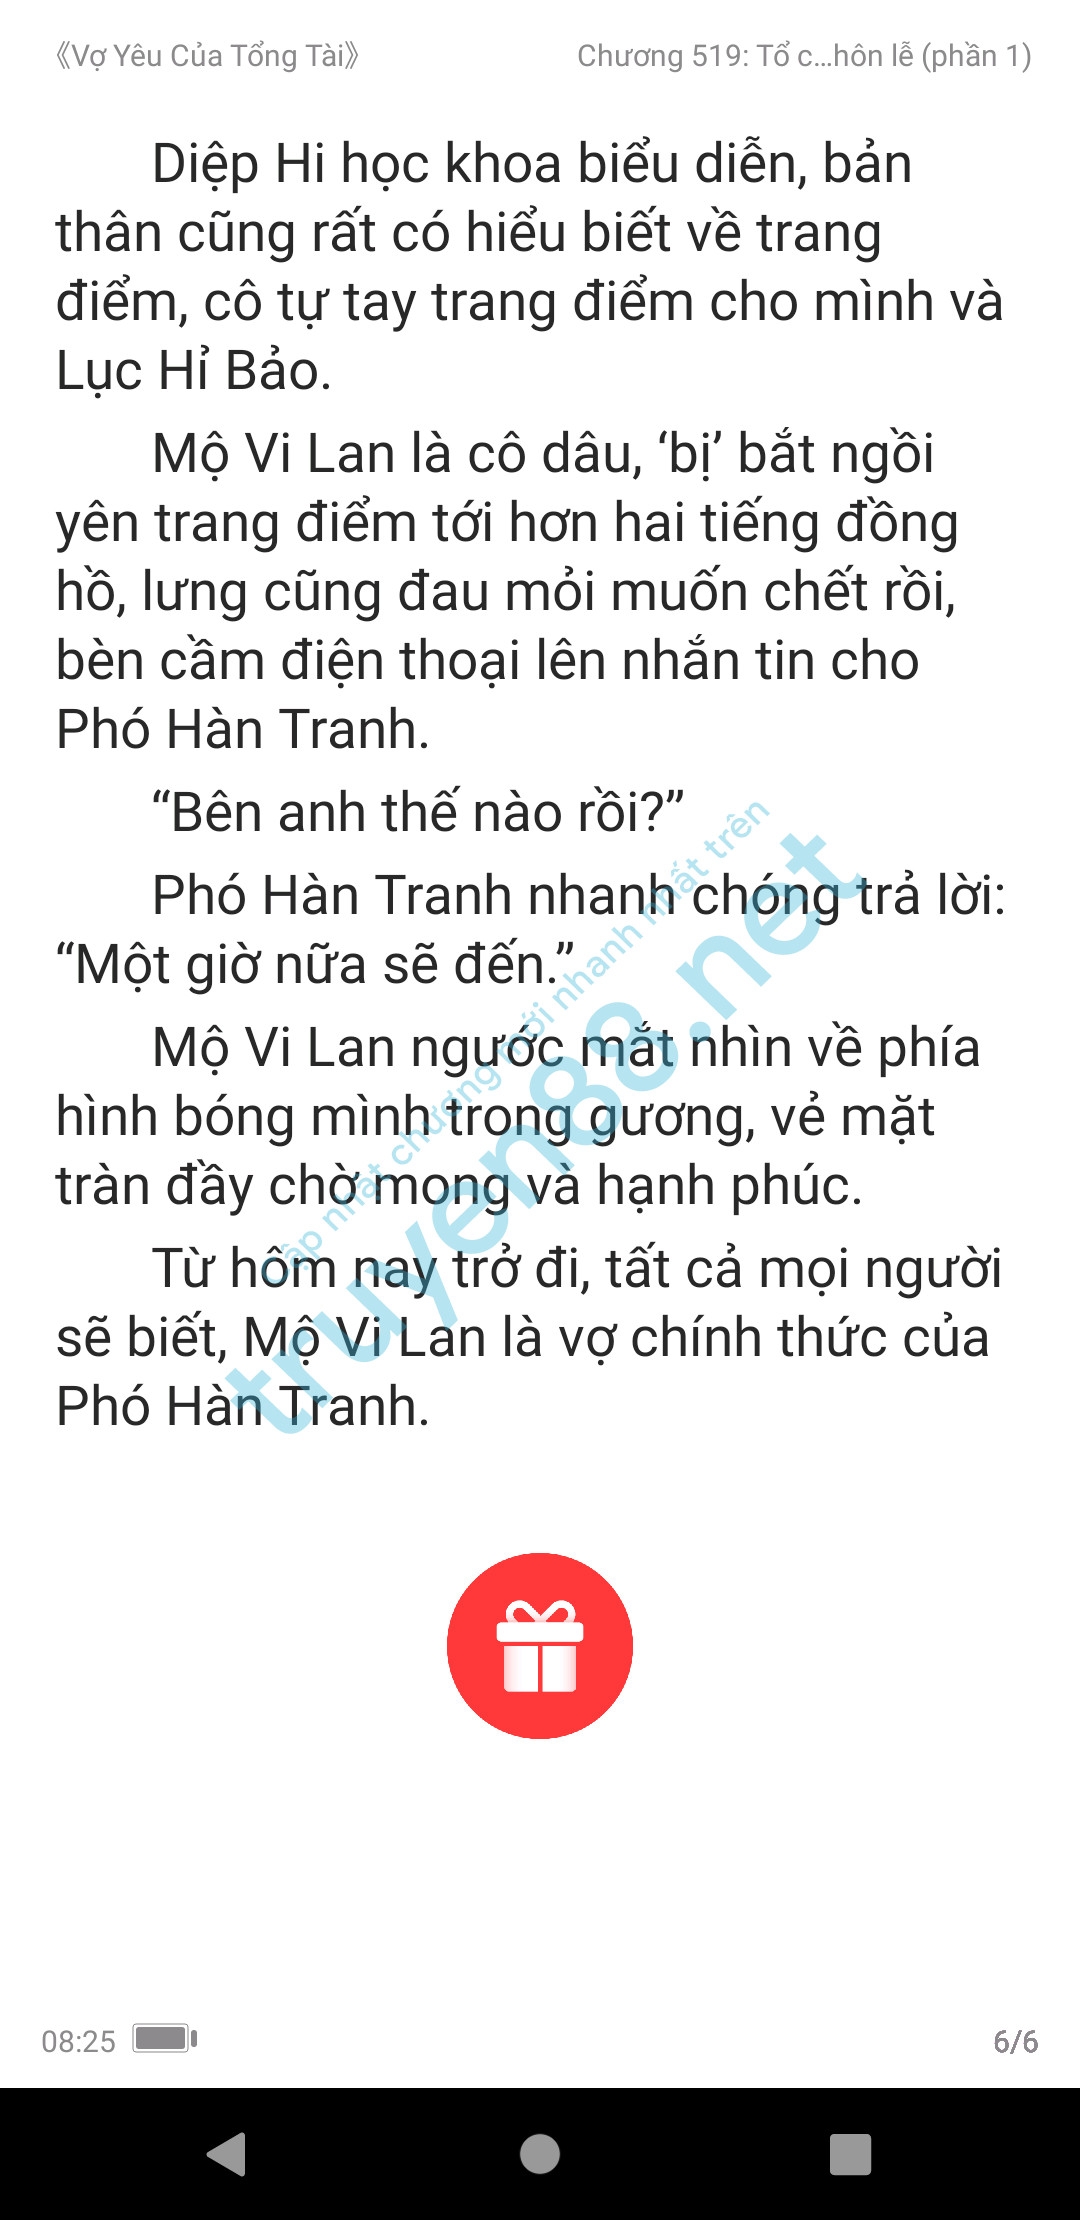 vo-yeu-cua-tong-tai-mo-vi-lan--pho-han-tranh-529-1